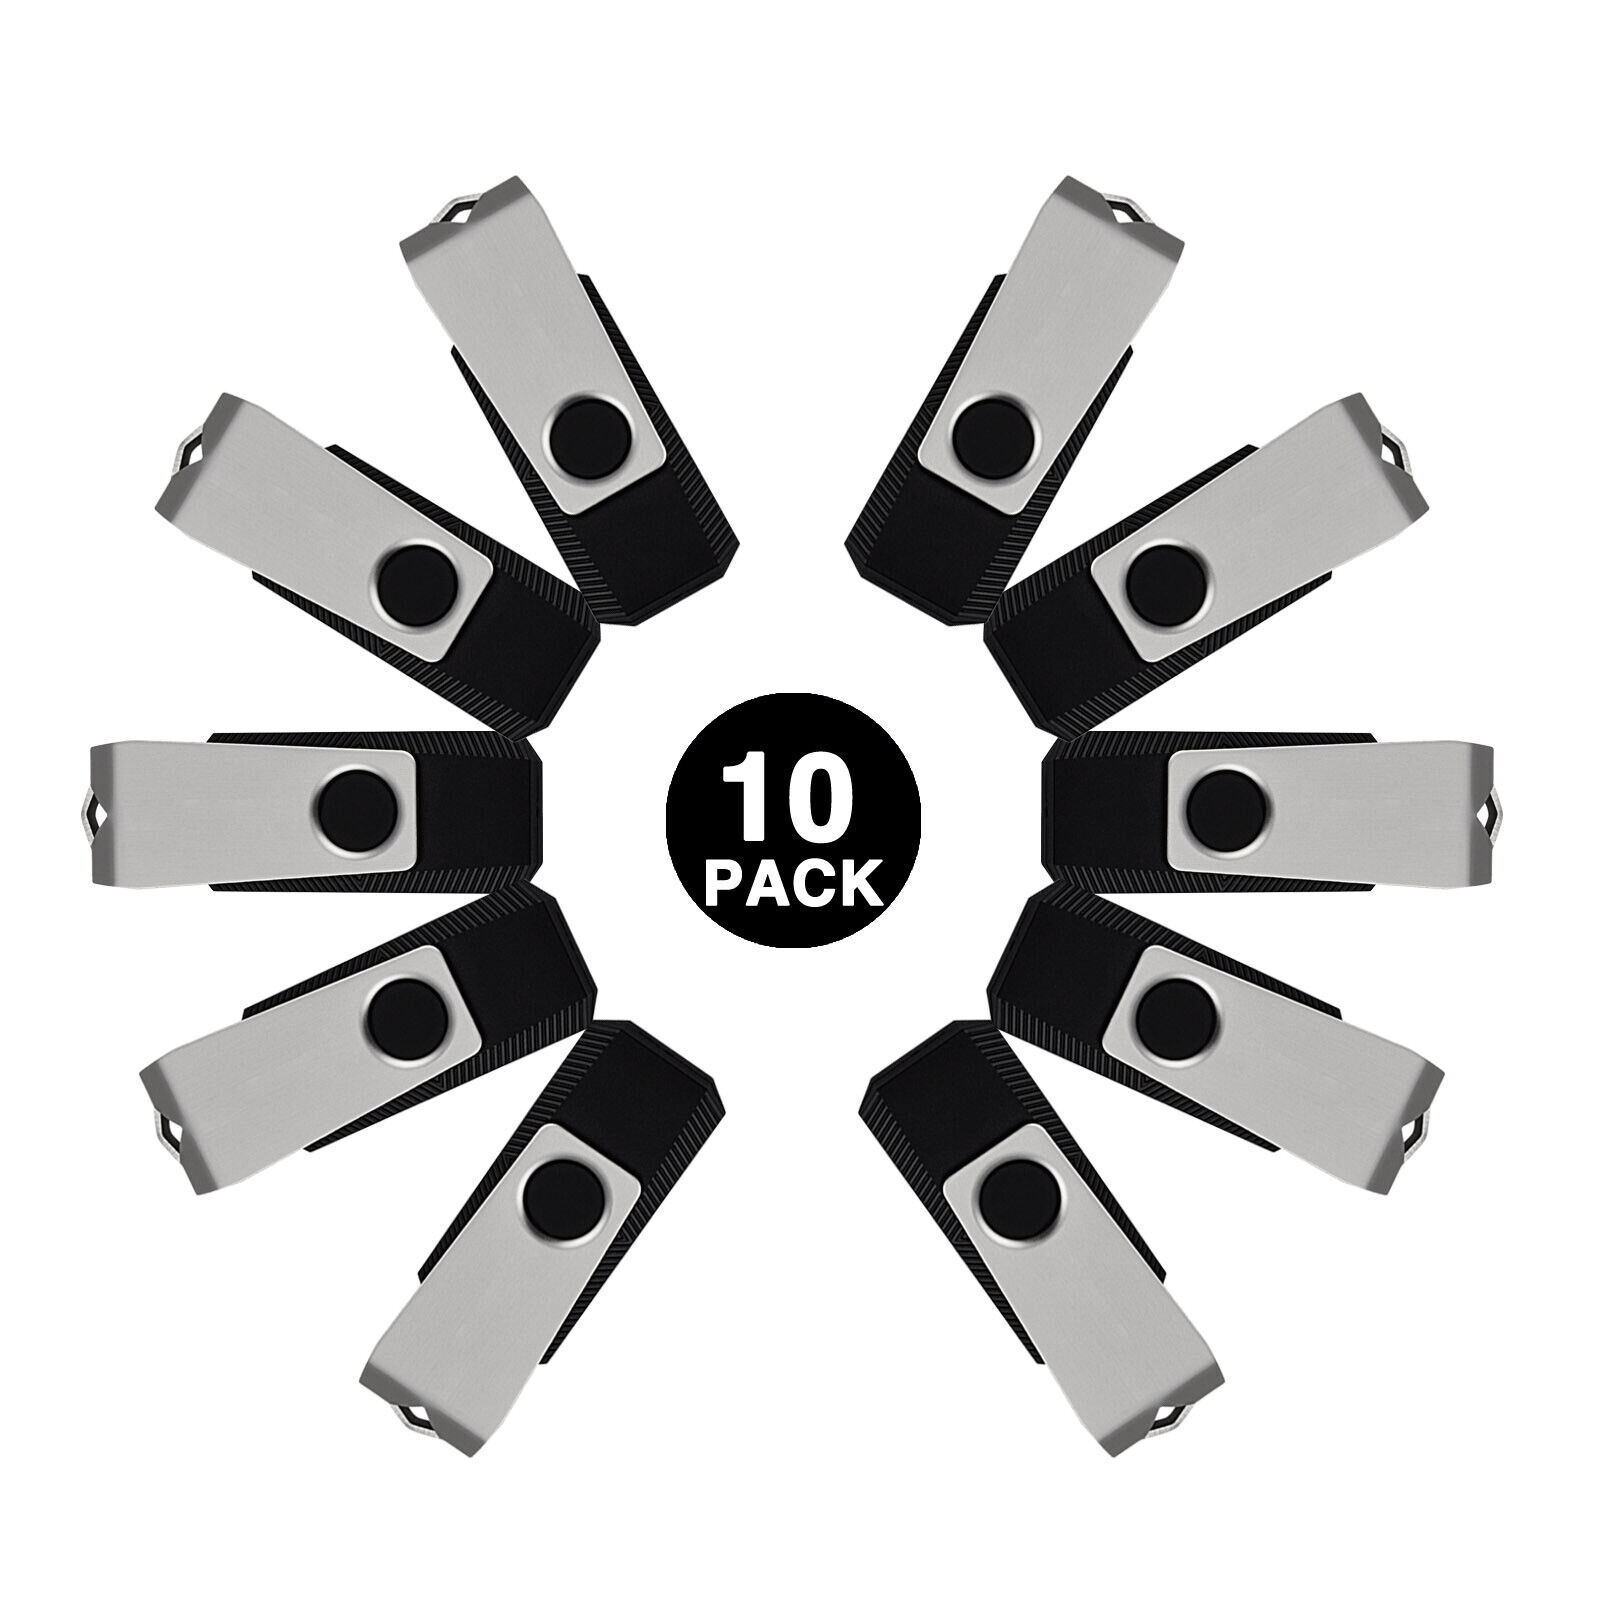 128MB USB 2.0 10 Pack Metal Swivel Flash Drive Memory Storage Thumb Drive Black